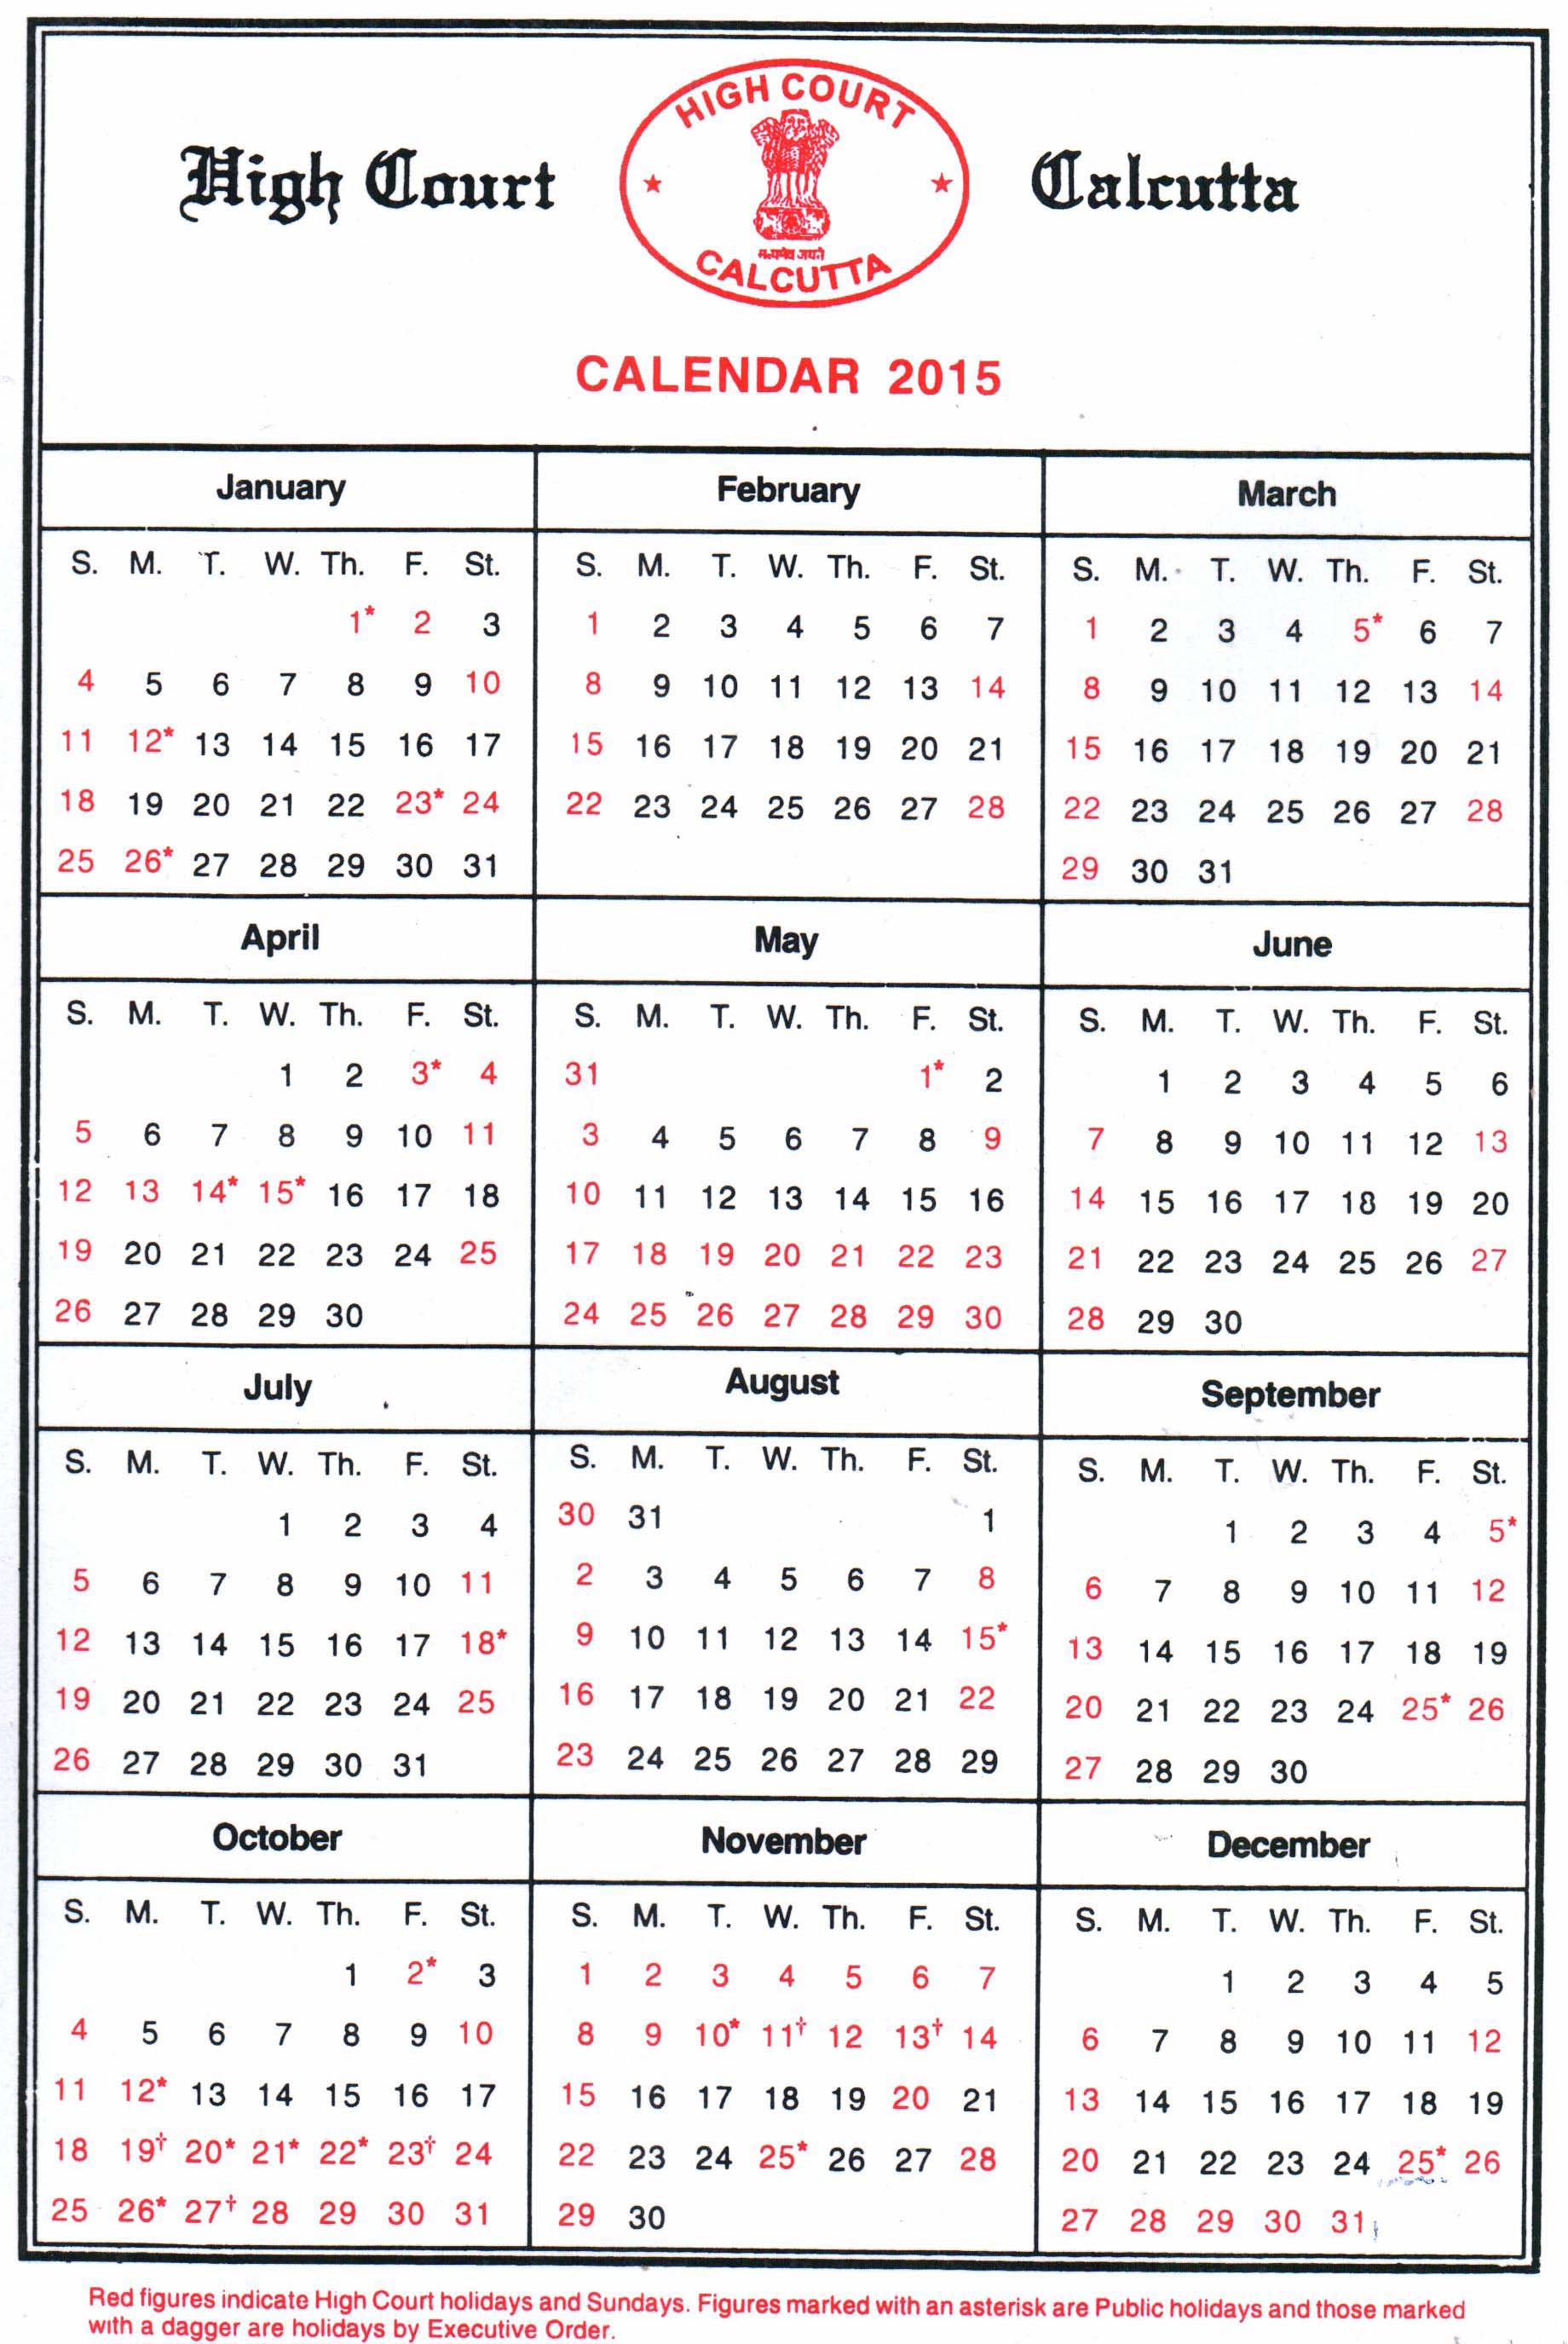 Bombay high court holidays 2017 calendar